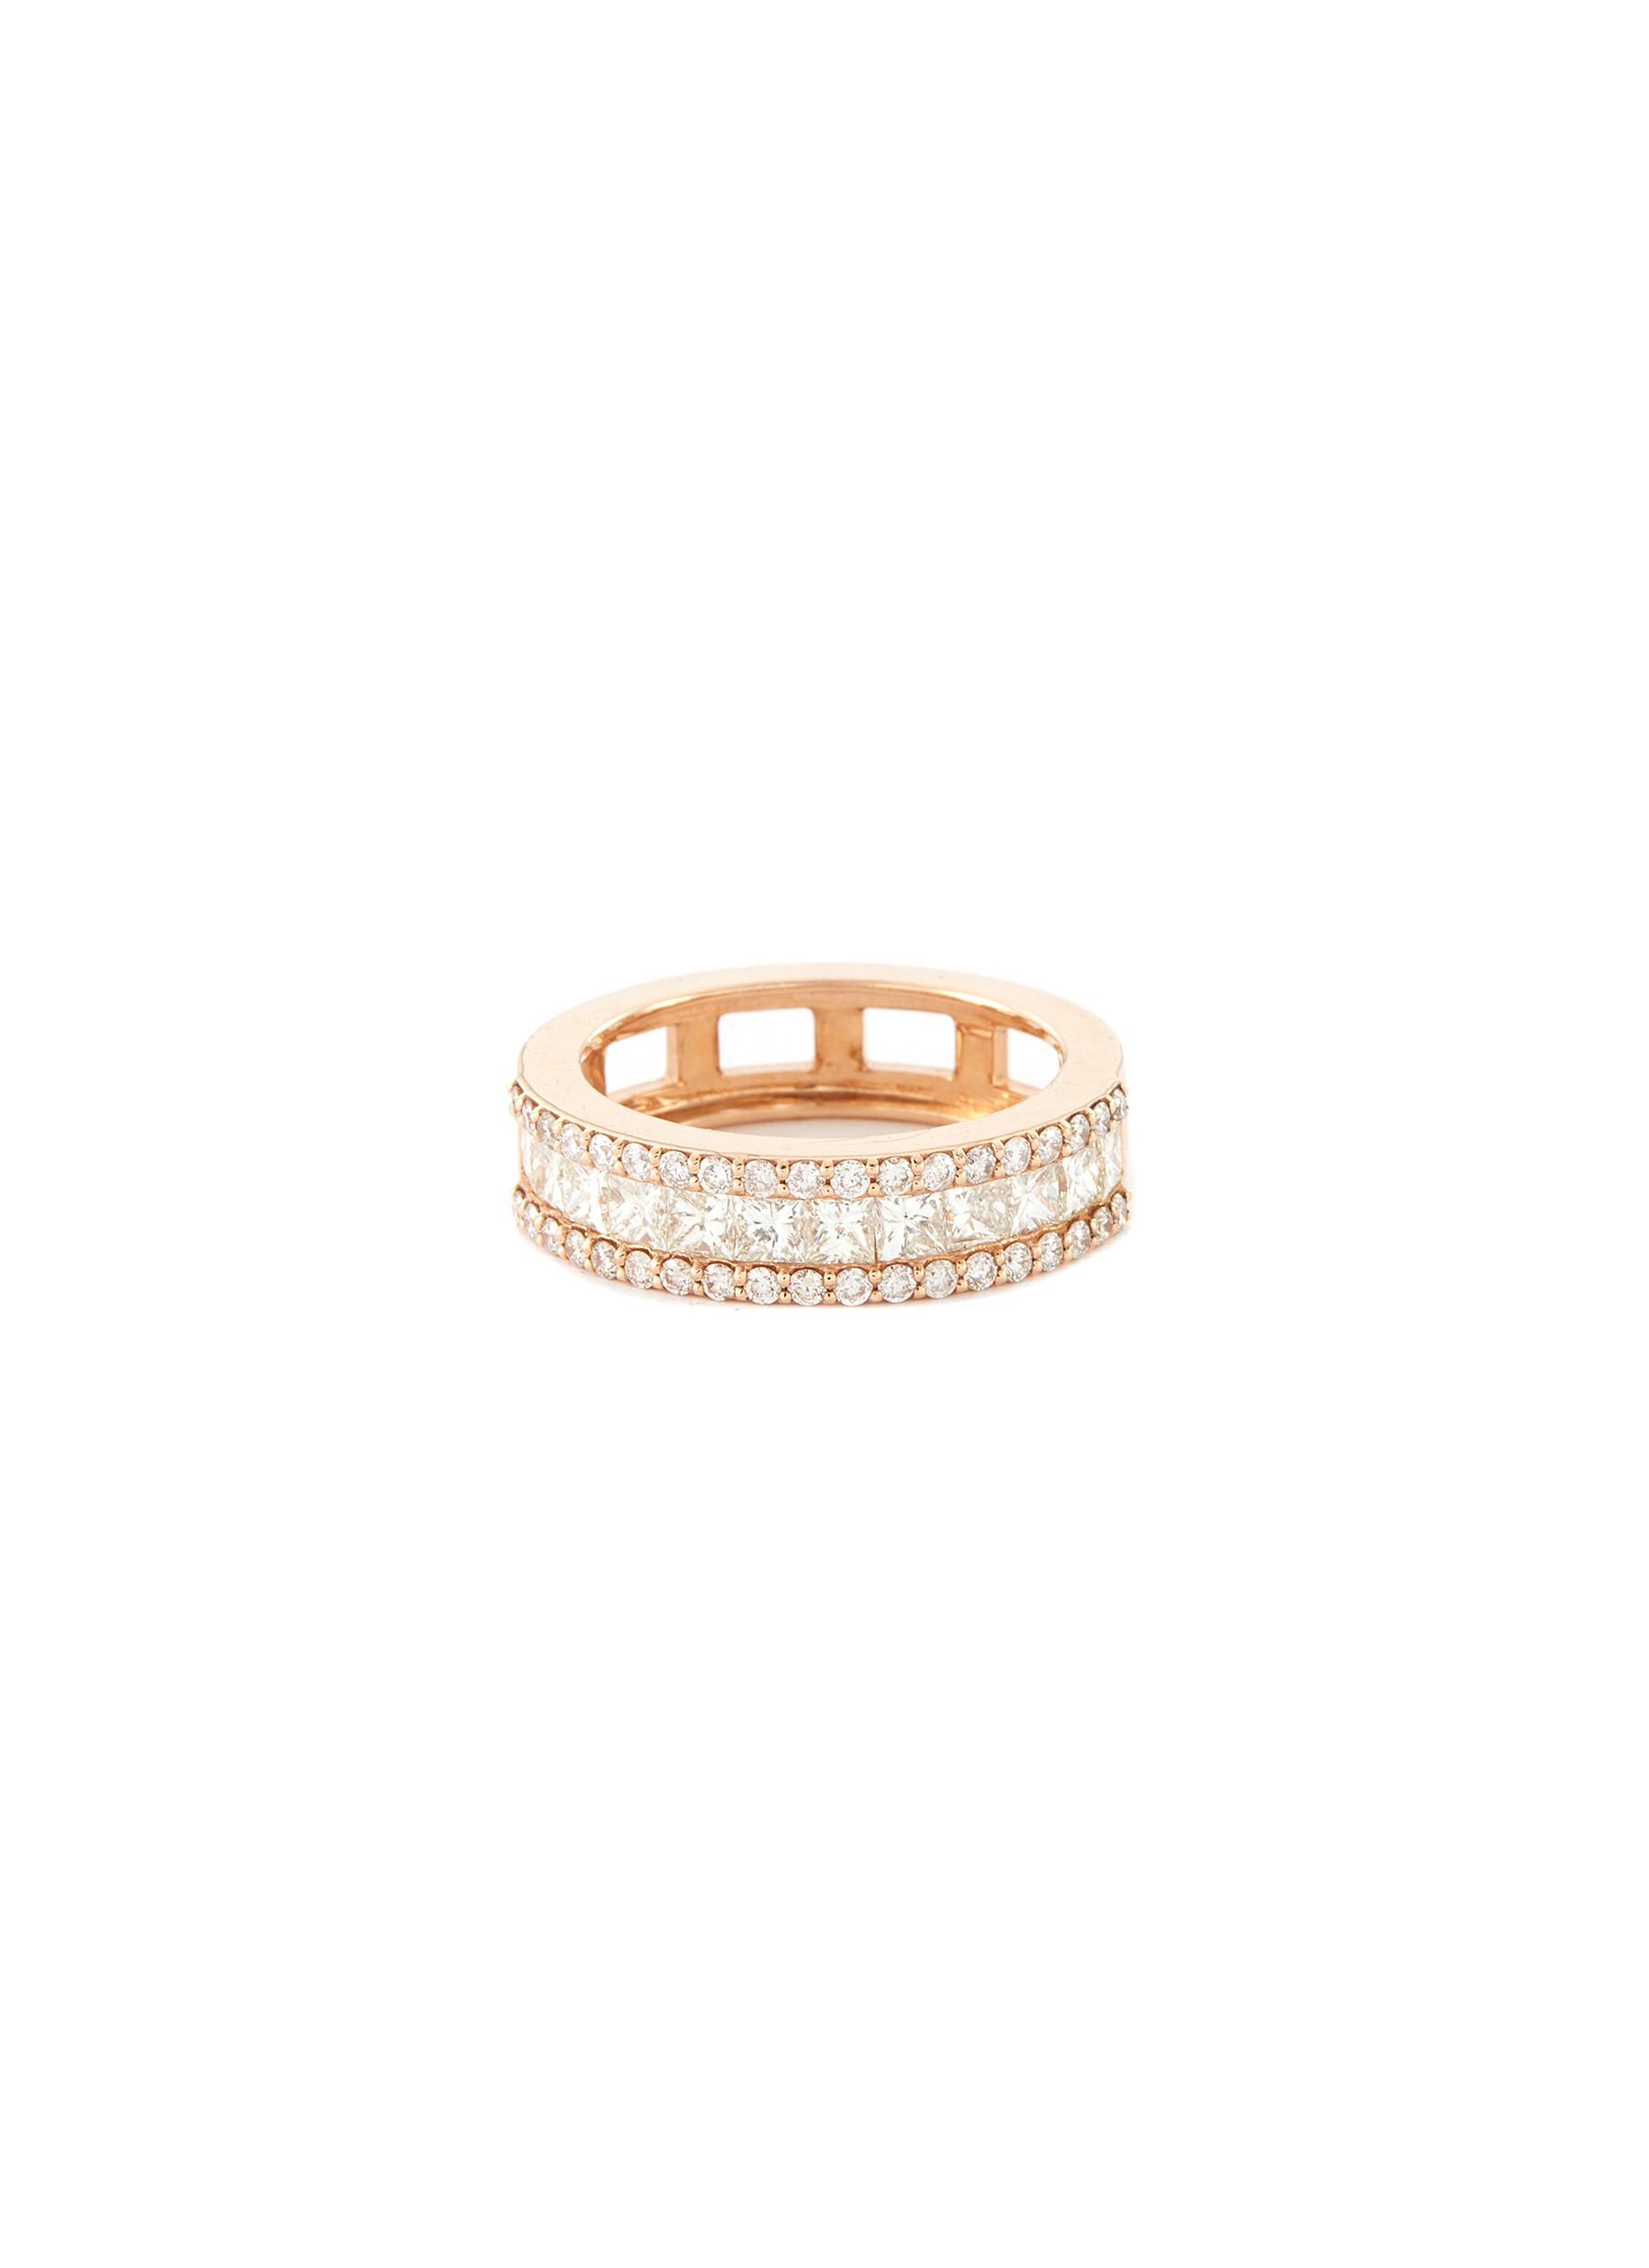 BEE GODDESS 'Mondrian' Diamond 14k Rose Gold Ring